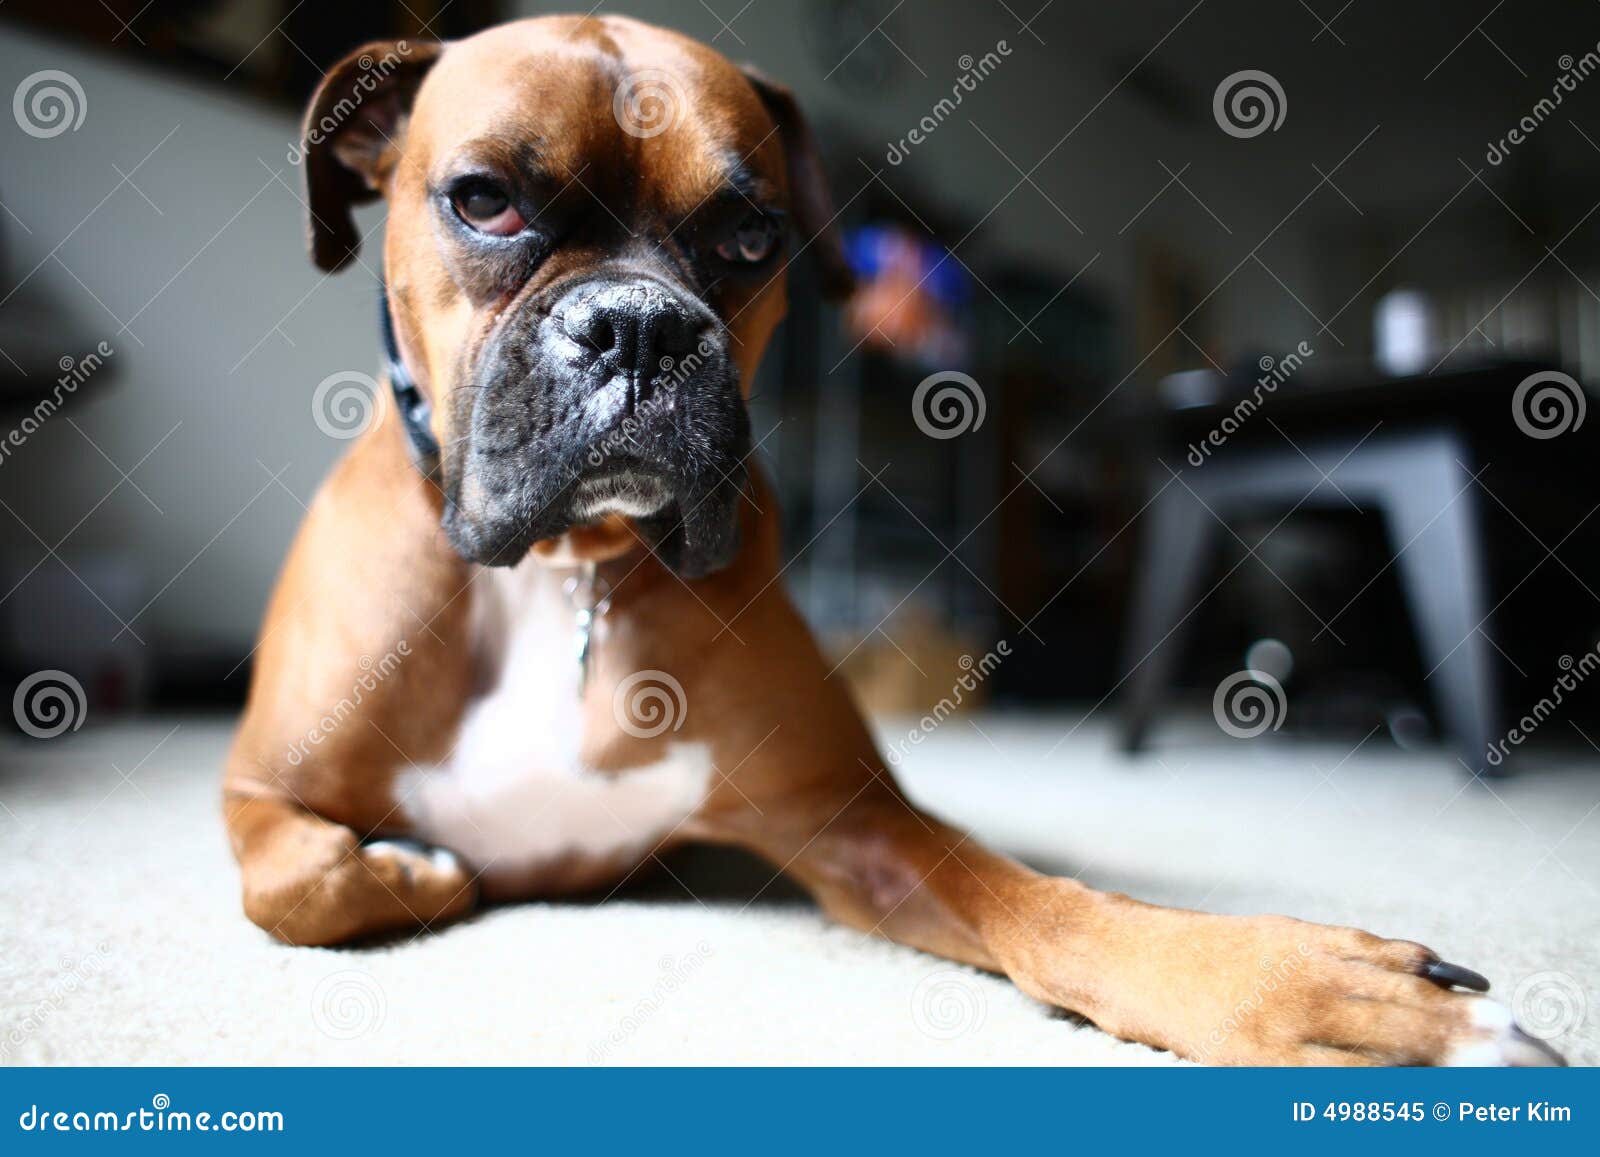 Dog laying on floor stock image. Image of breed, buddy - 4988545